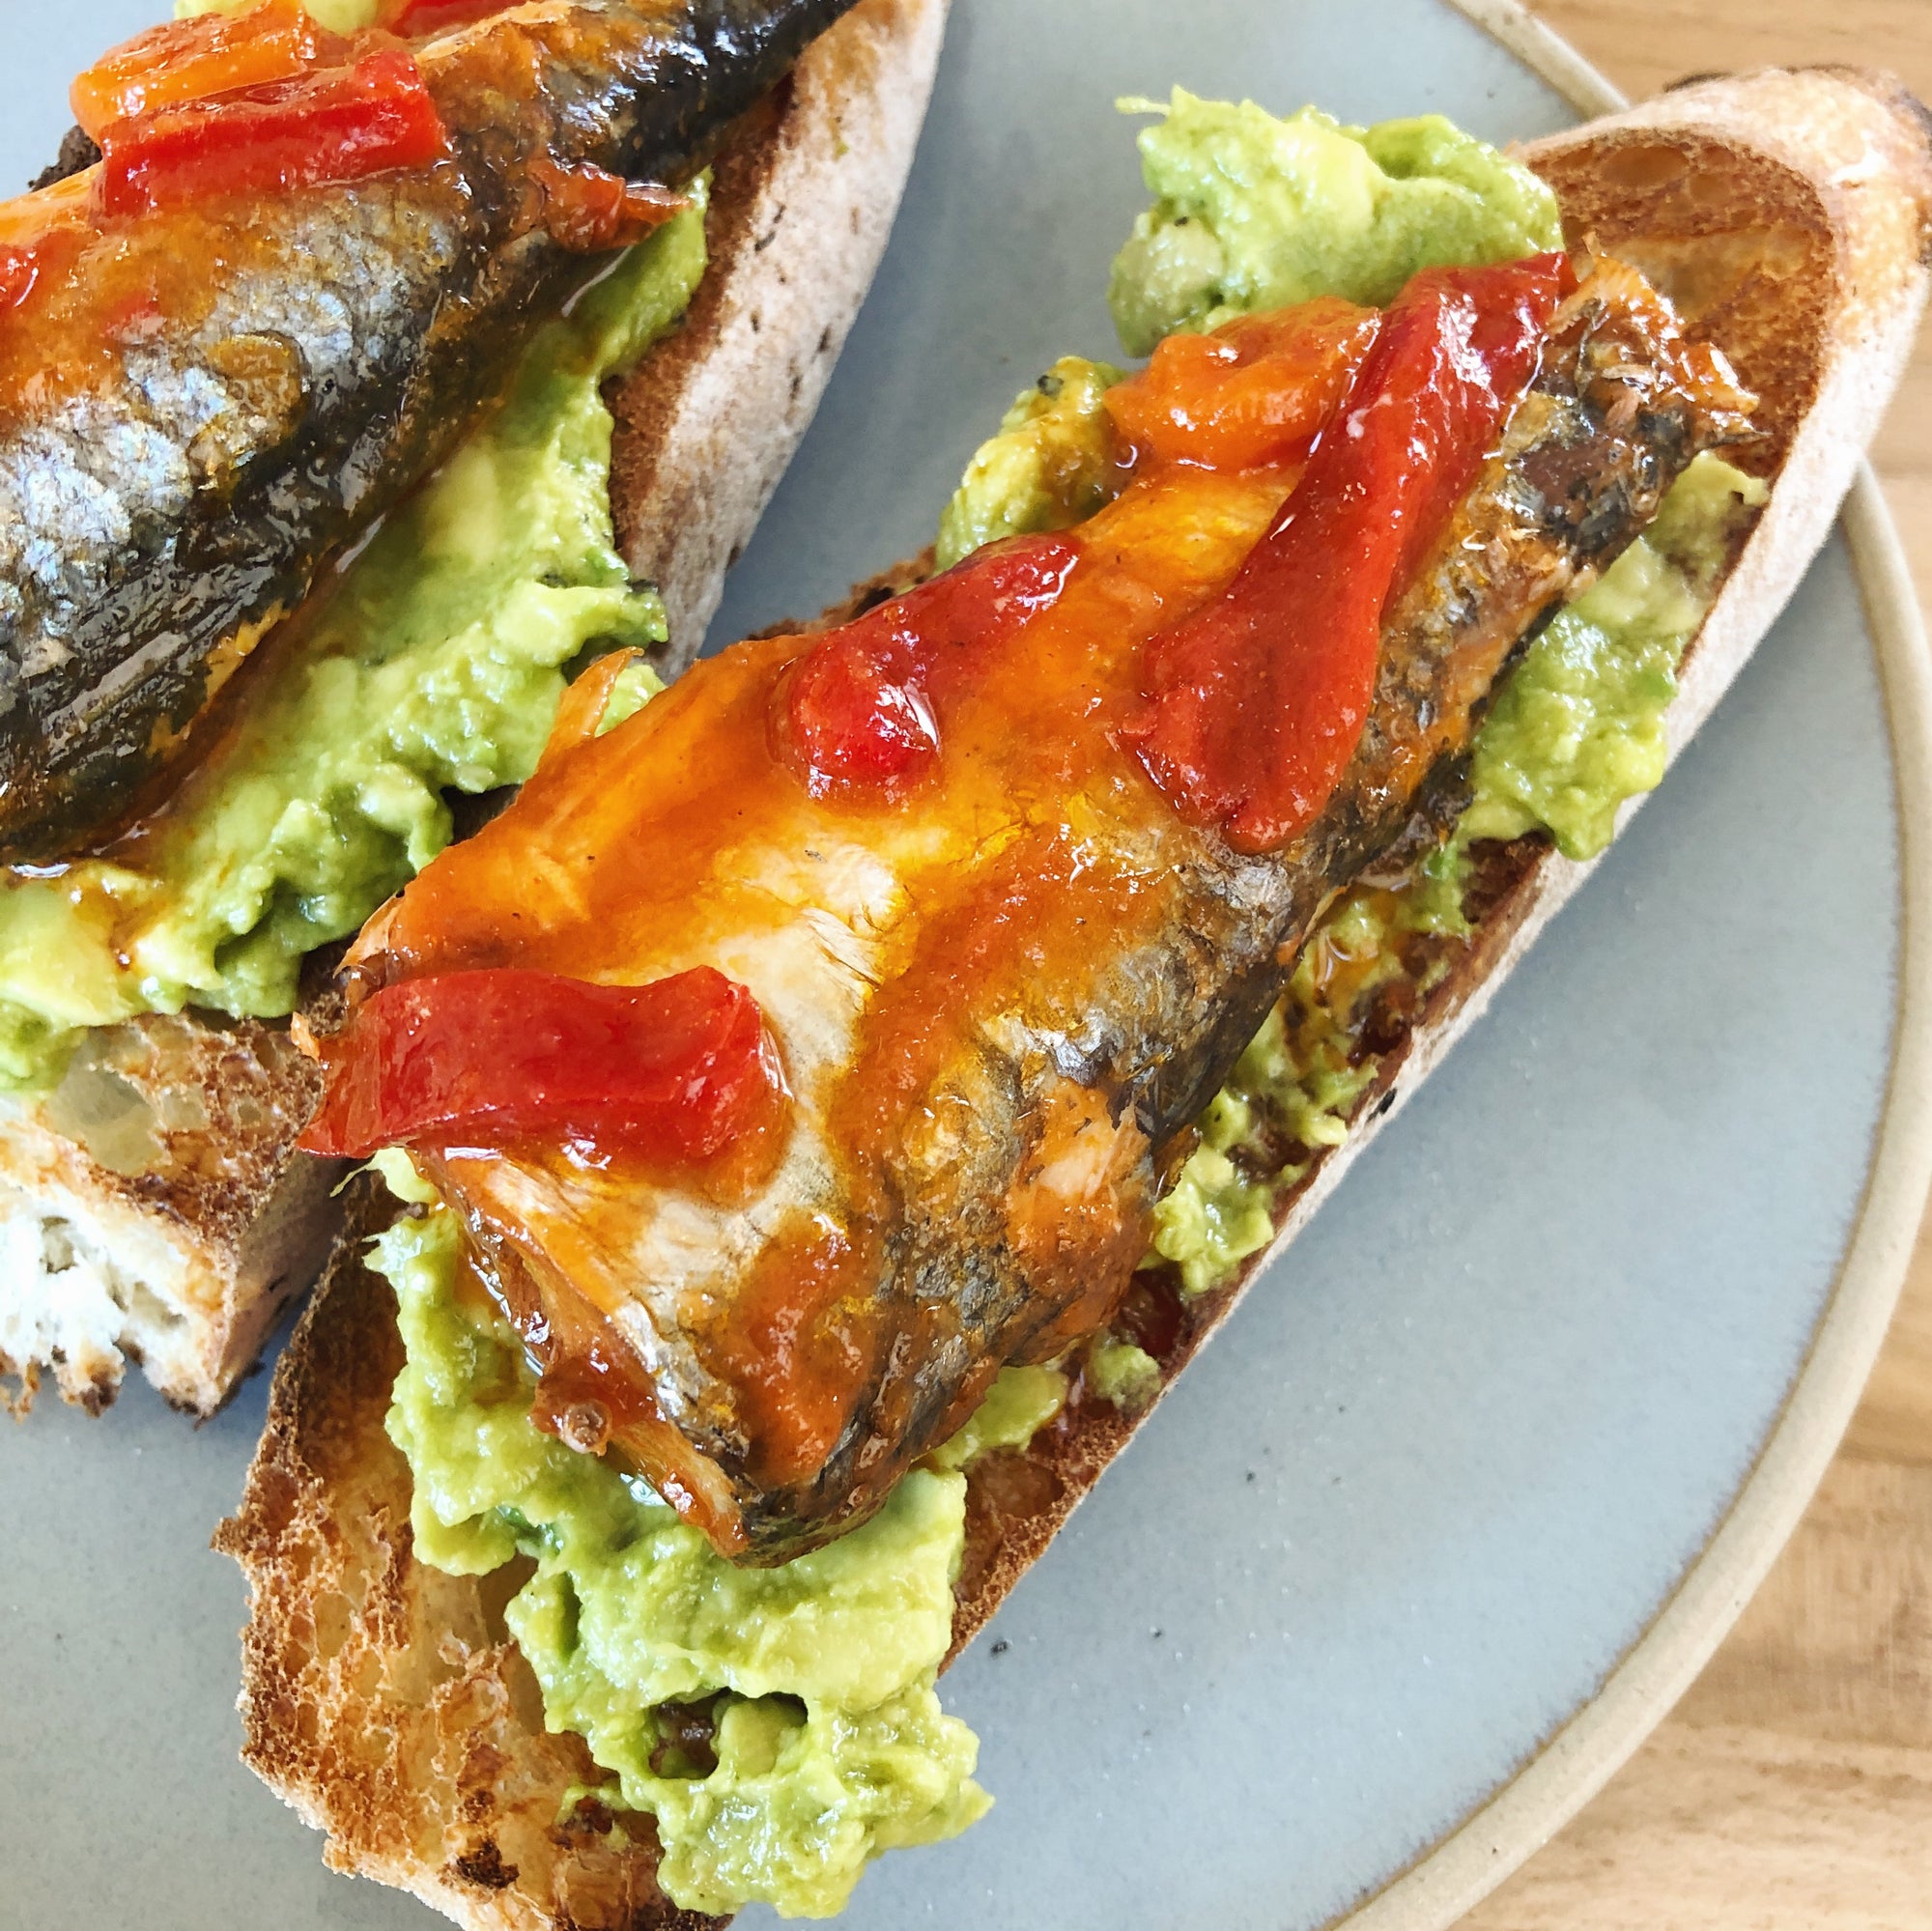 Spiced sardines - tinned fish - with avocado - Donostia Foods